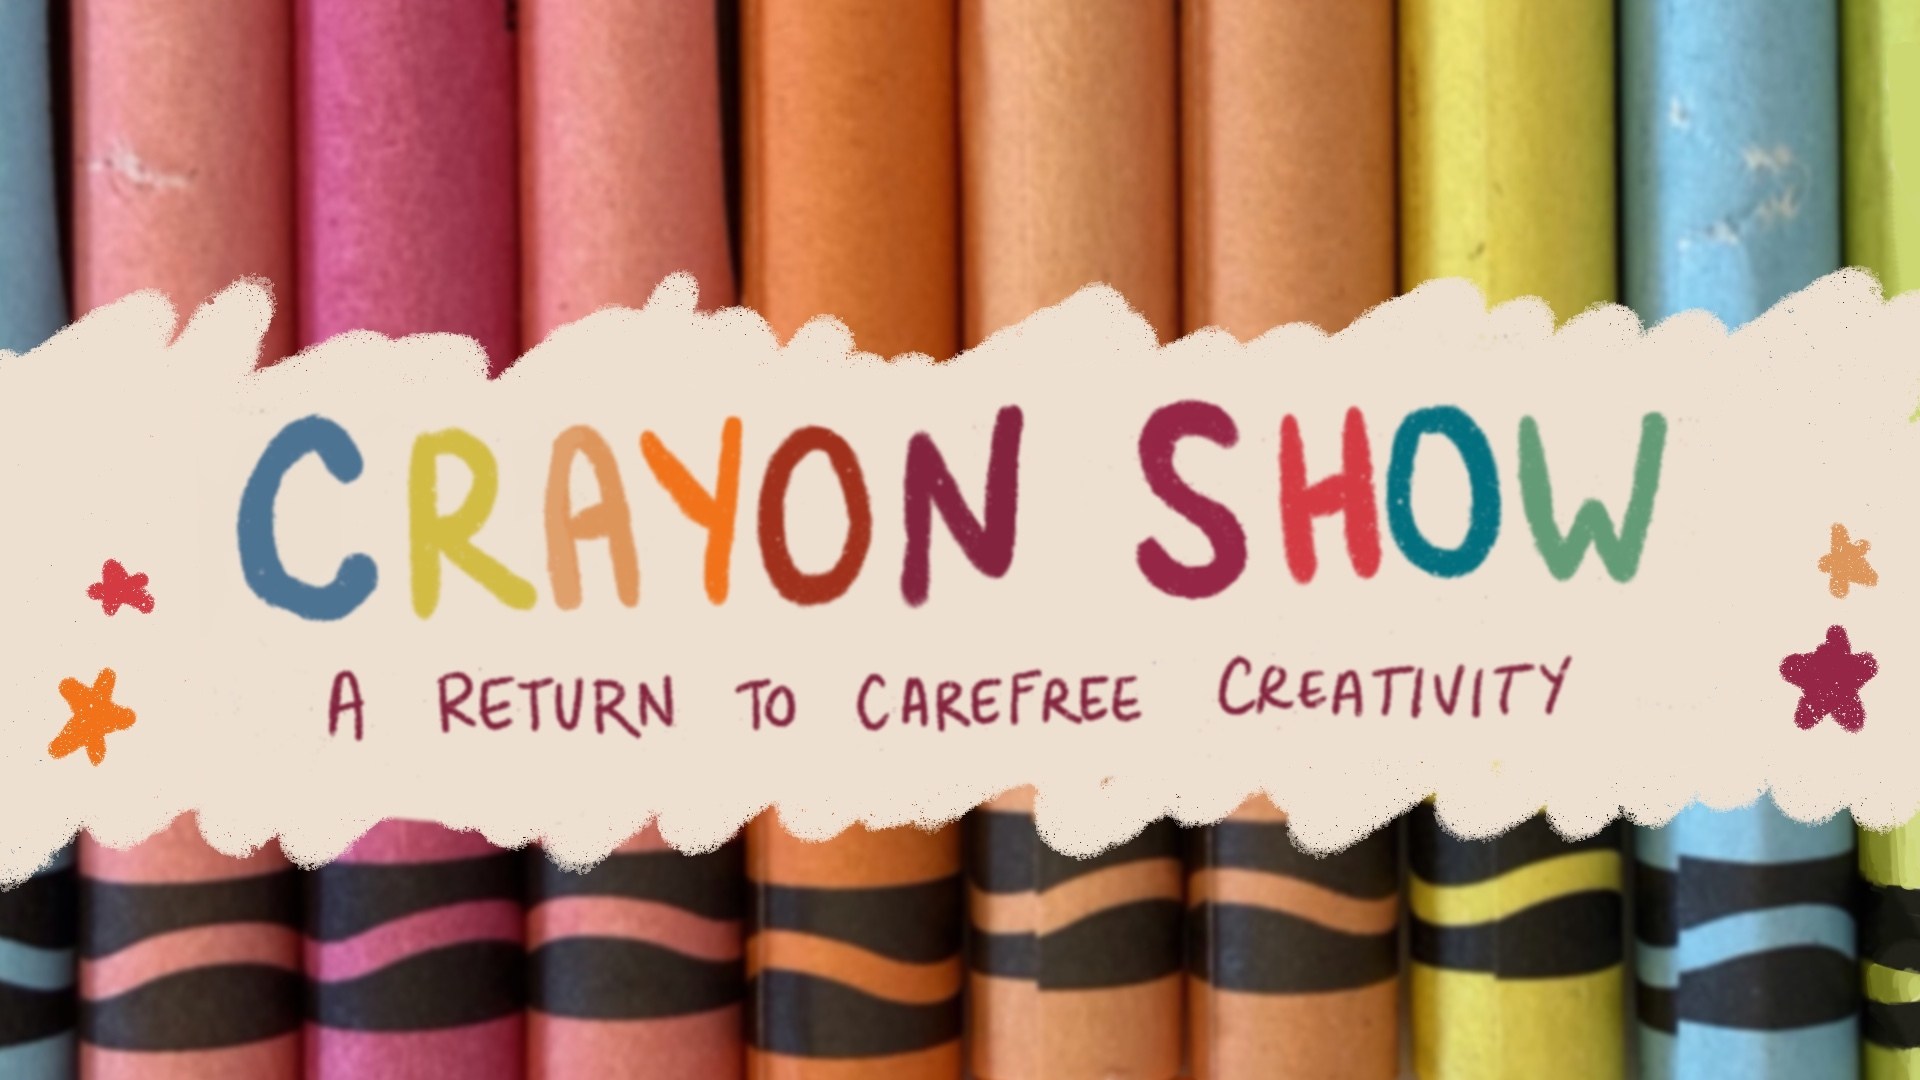 Crayon Show - A Return to Carefree Creativity